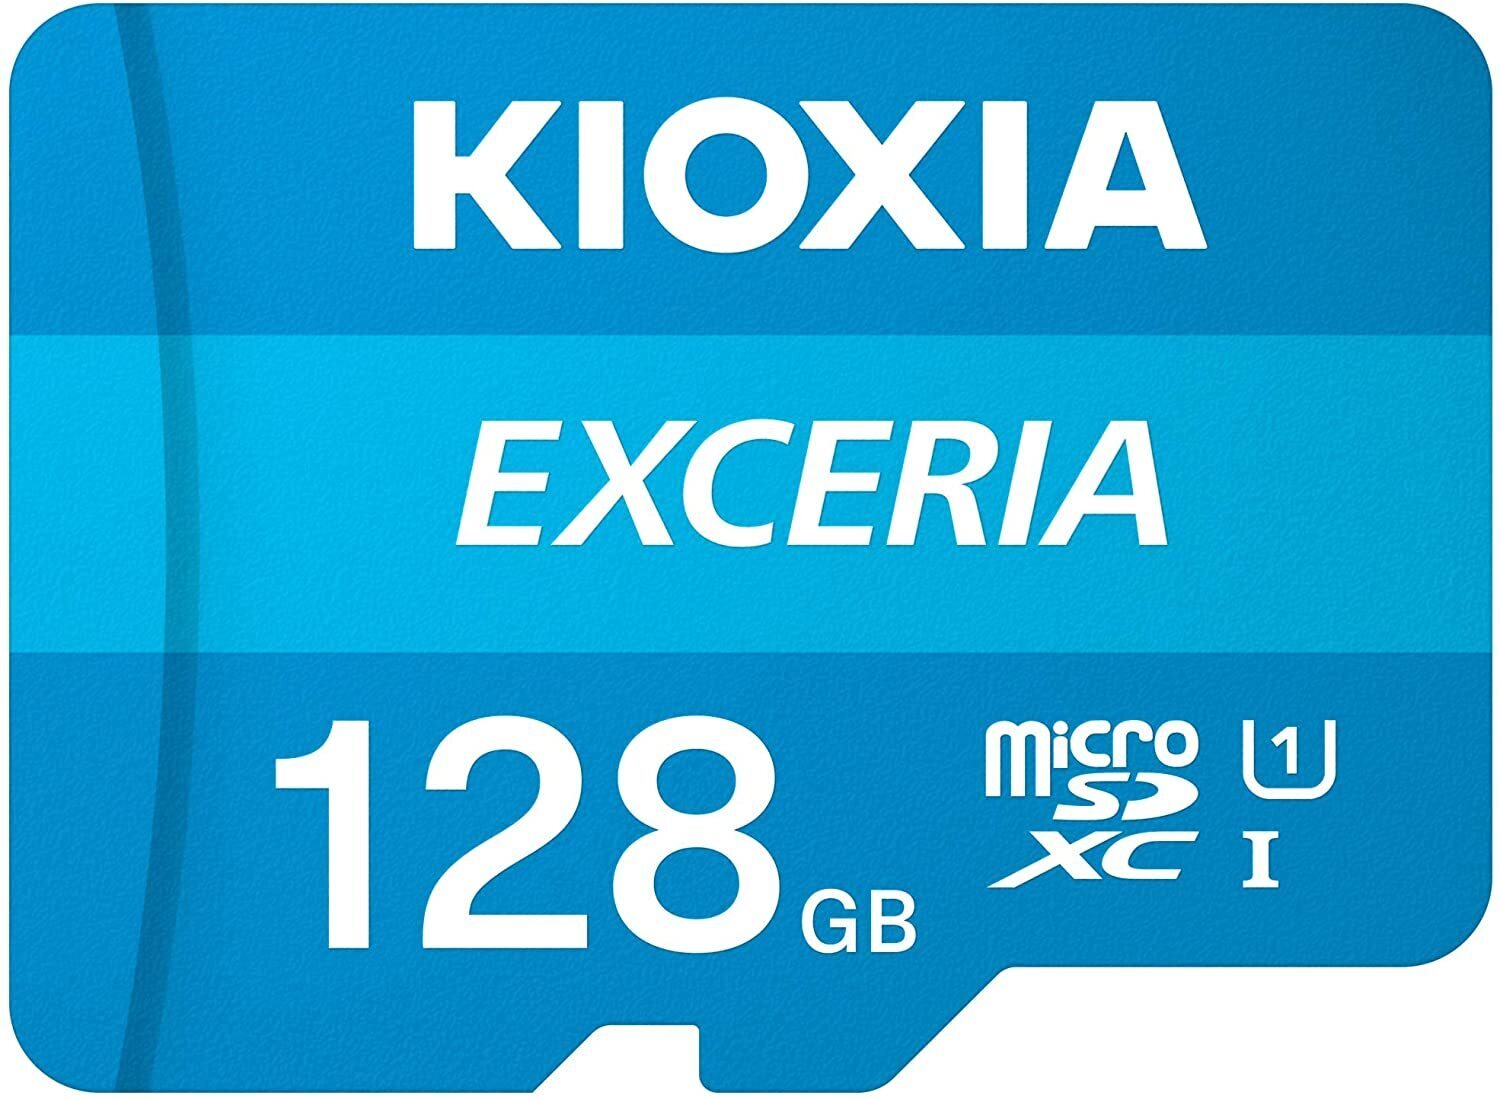 Micro SD KIOXIA EXCERIA 128GB Class 10 U1 Mobile Smart Phone Tablet Memory Cards